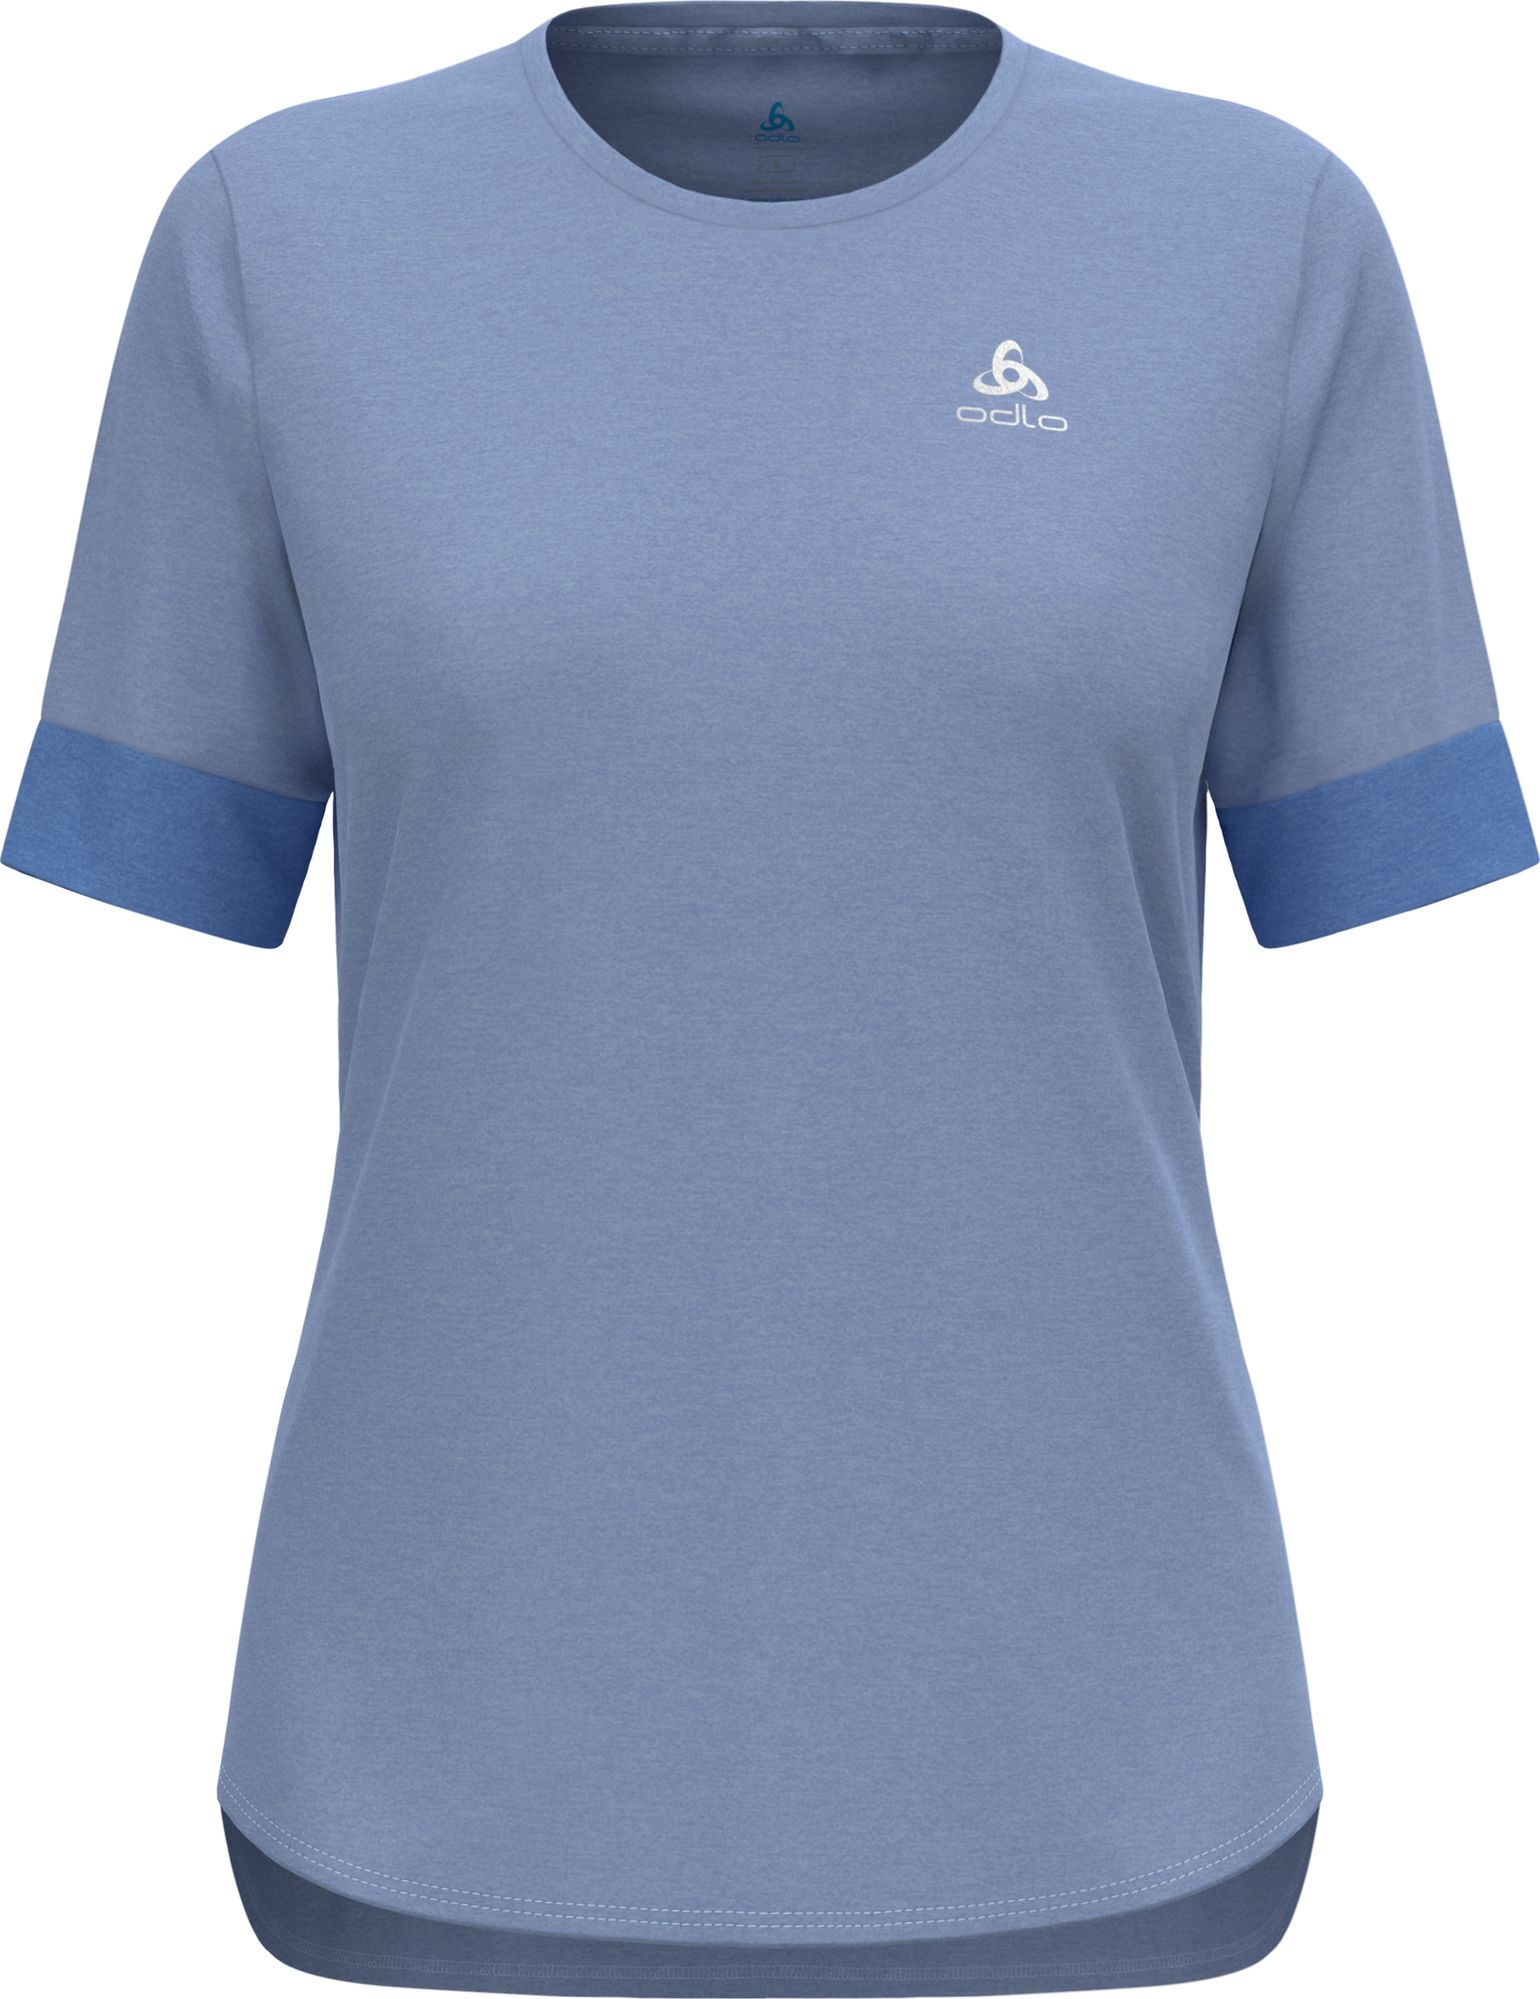 Odlo Women's T-shirt Crew Neck S/S Ride 365 Blue Heron/Persian Jewel